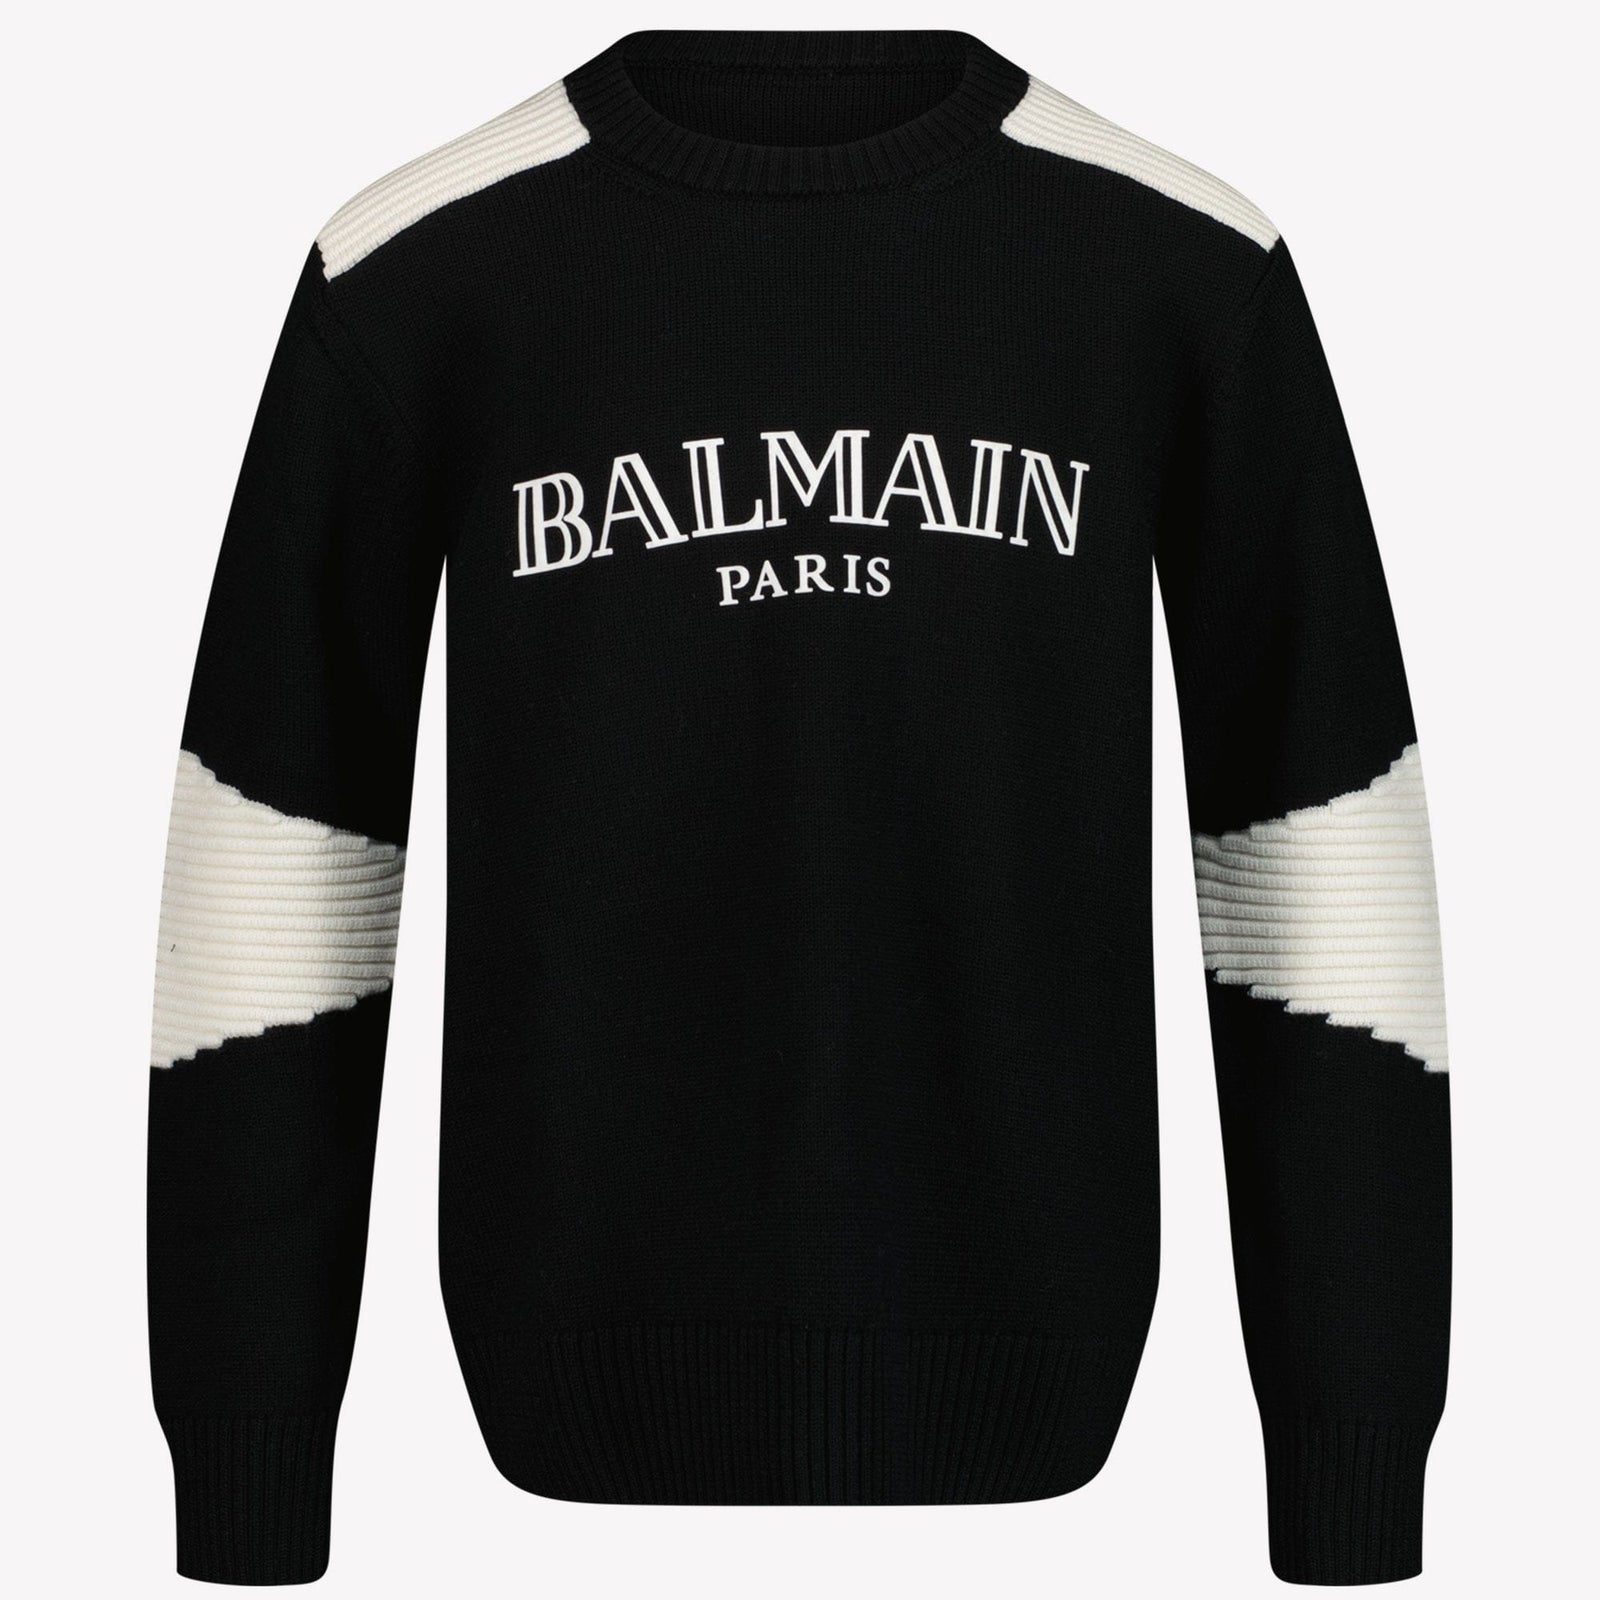 Balmain Unisex tröja svart